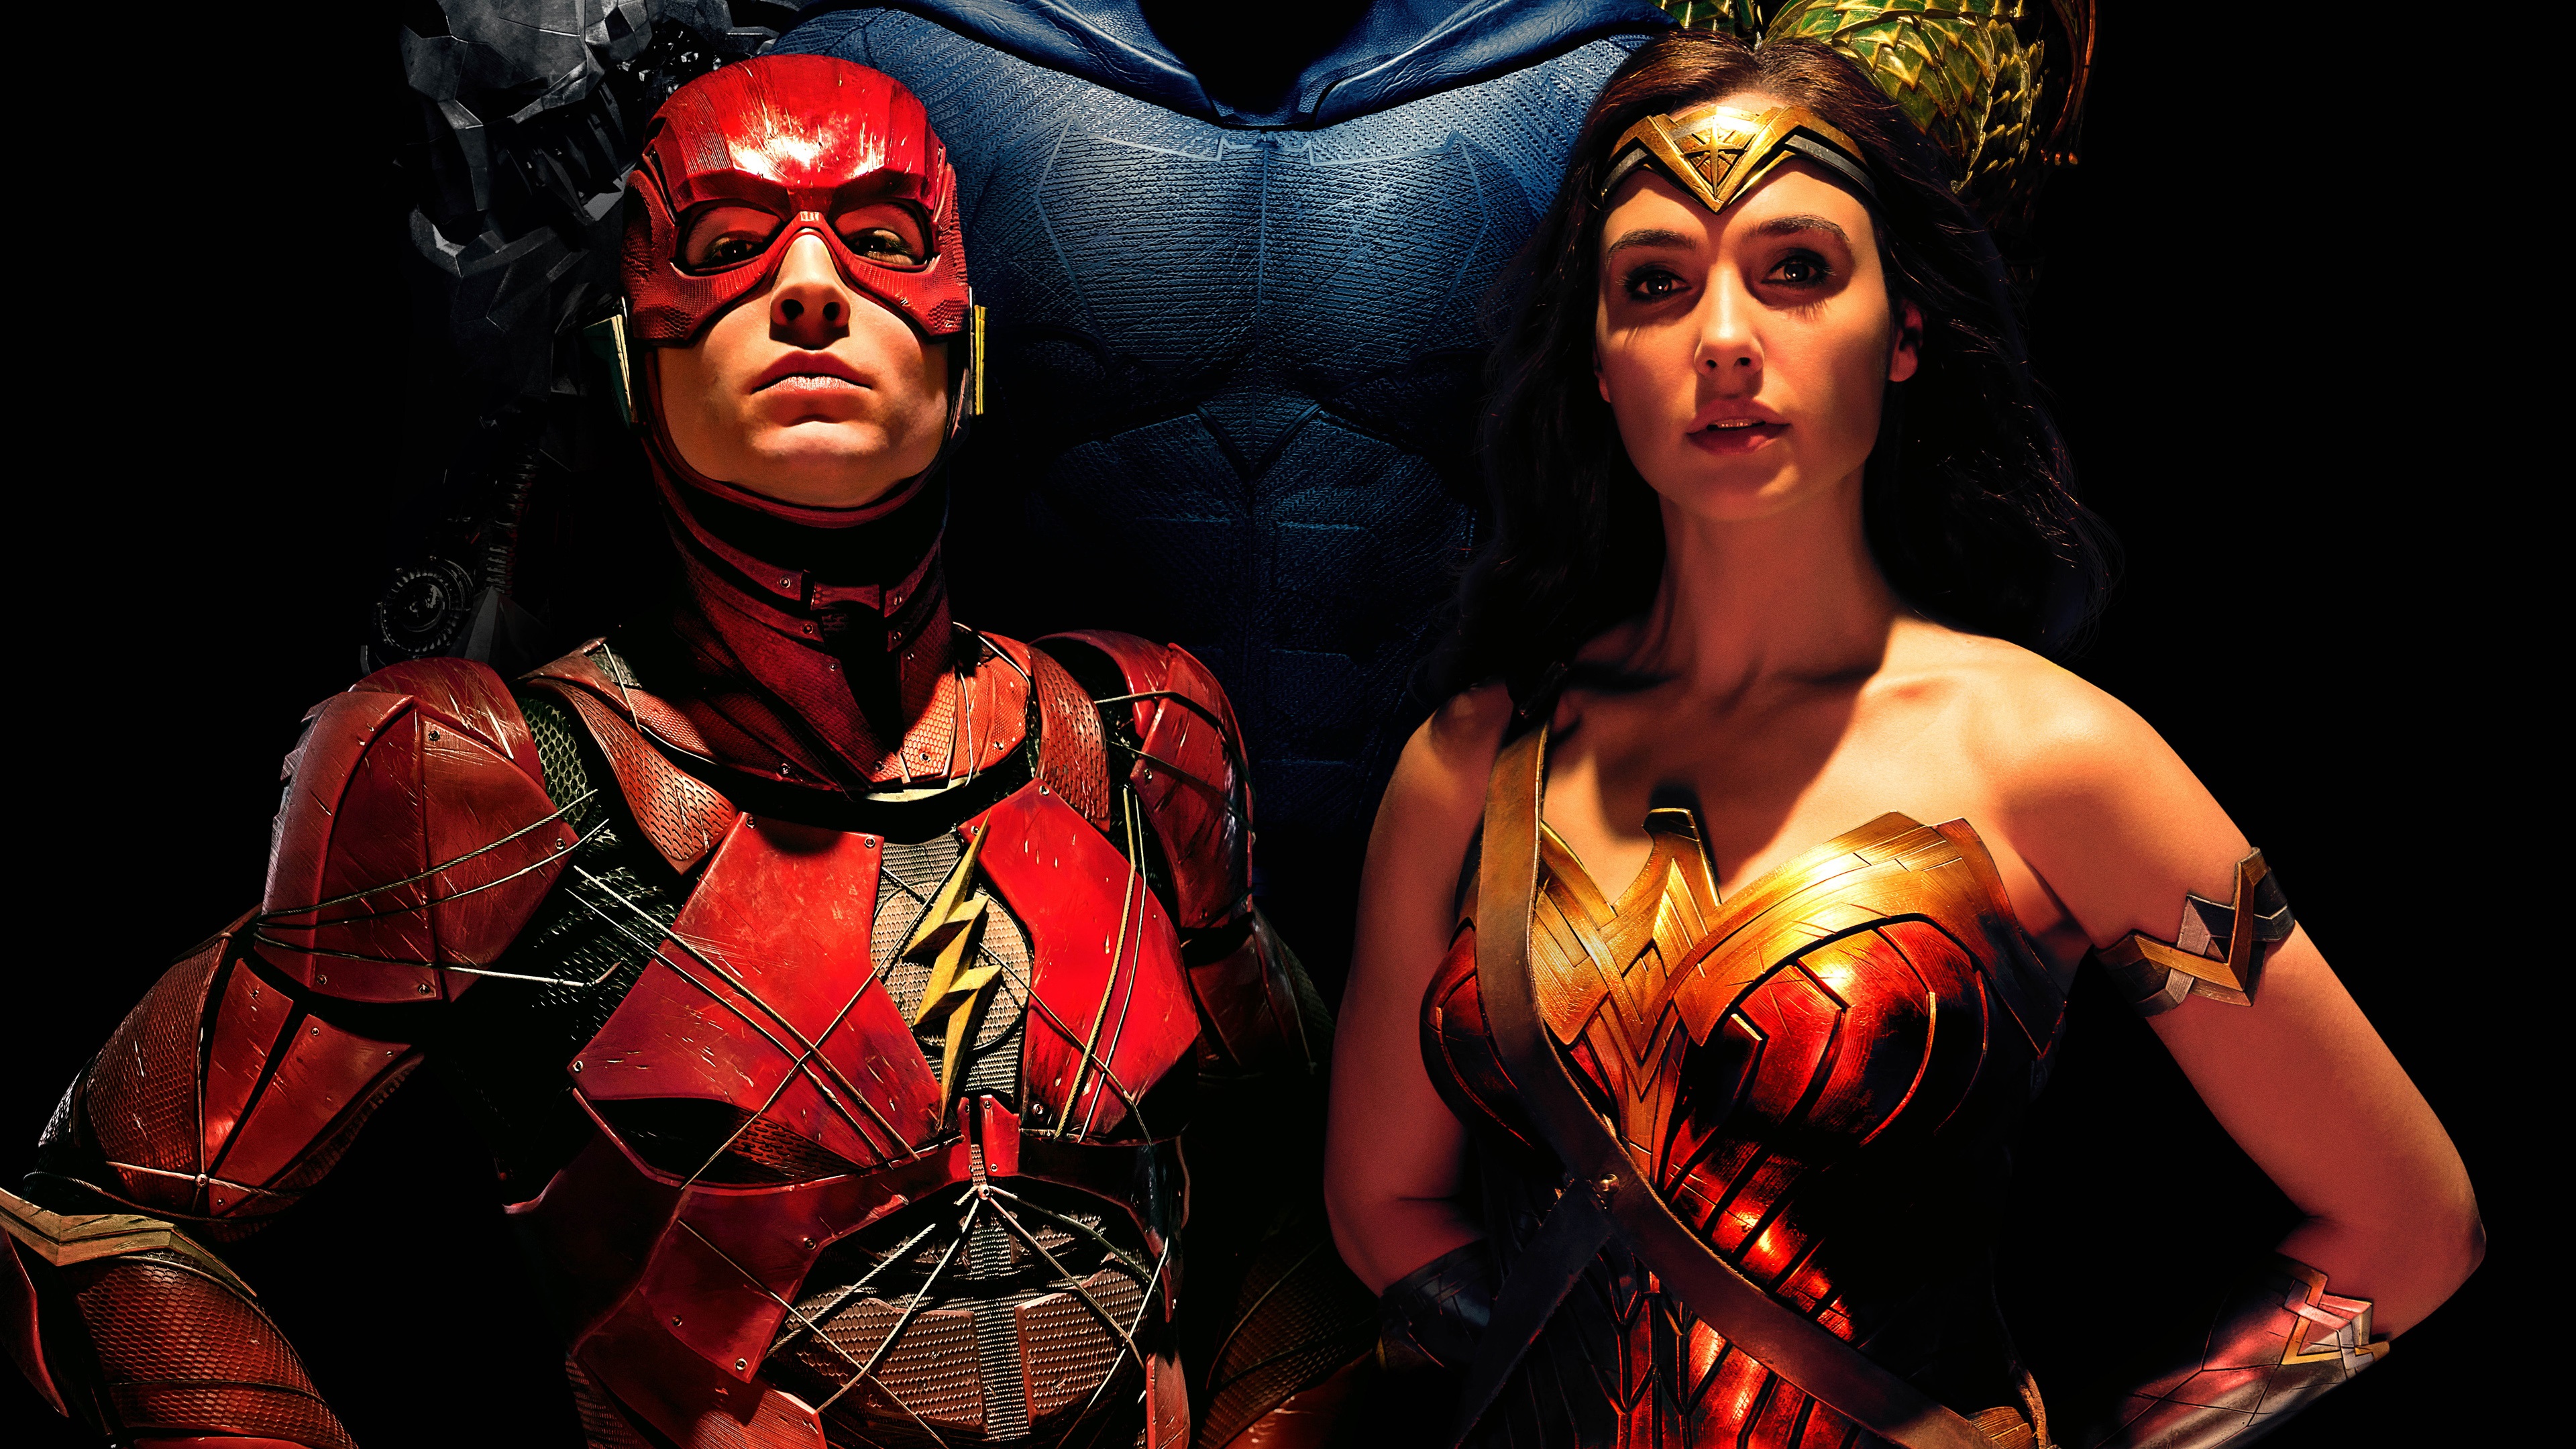 Wallpaper The Flash, Wonder Woman, Justice League - Heroes In New Justice League Movie - HD Wallpaper 